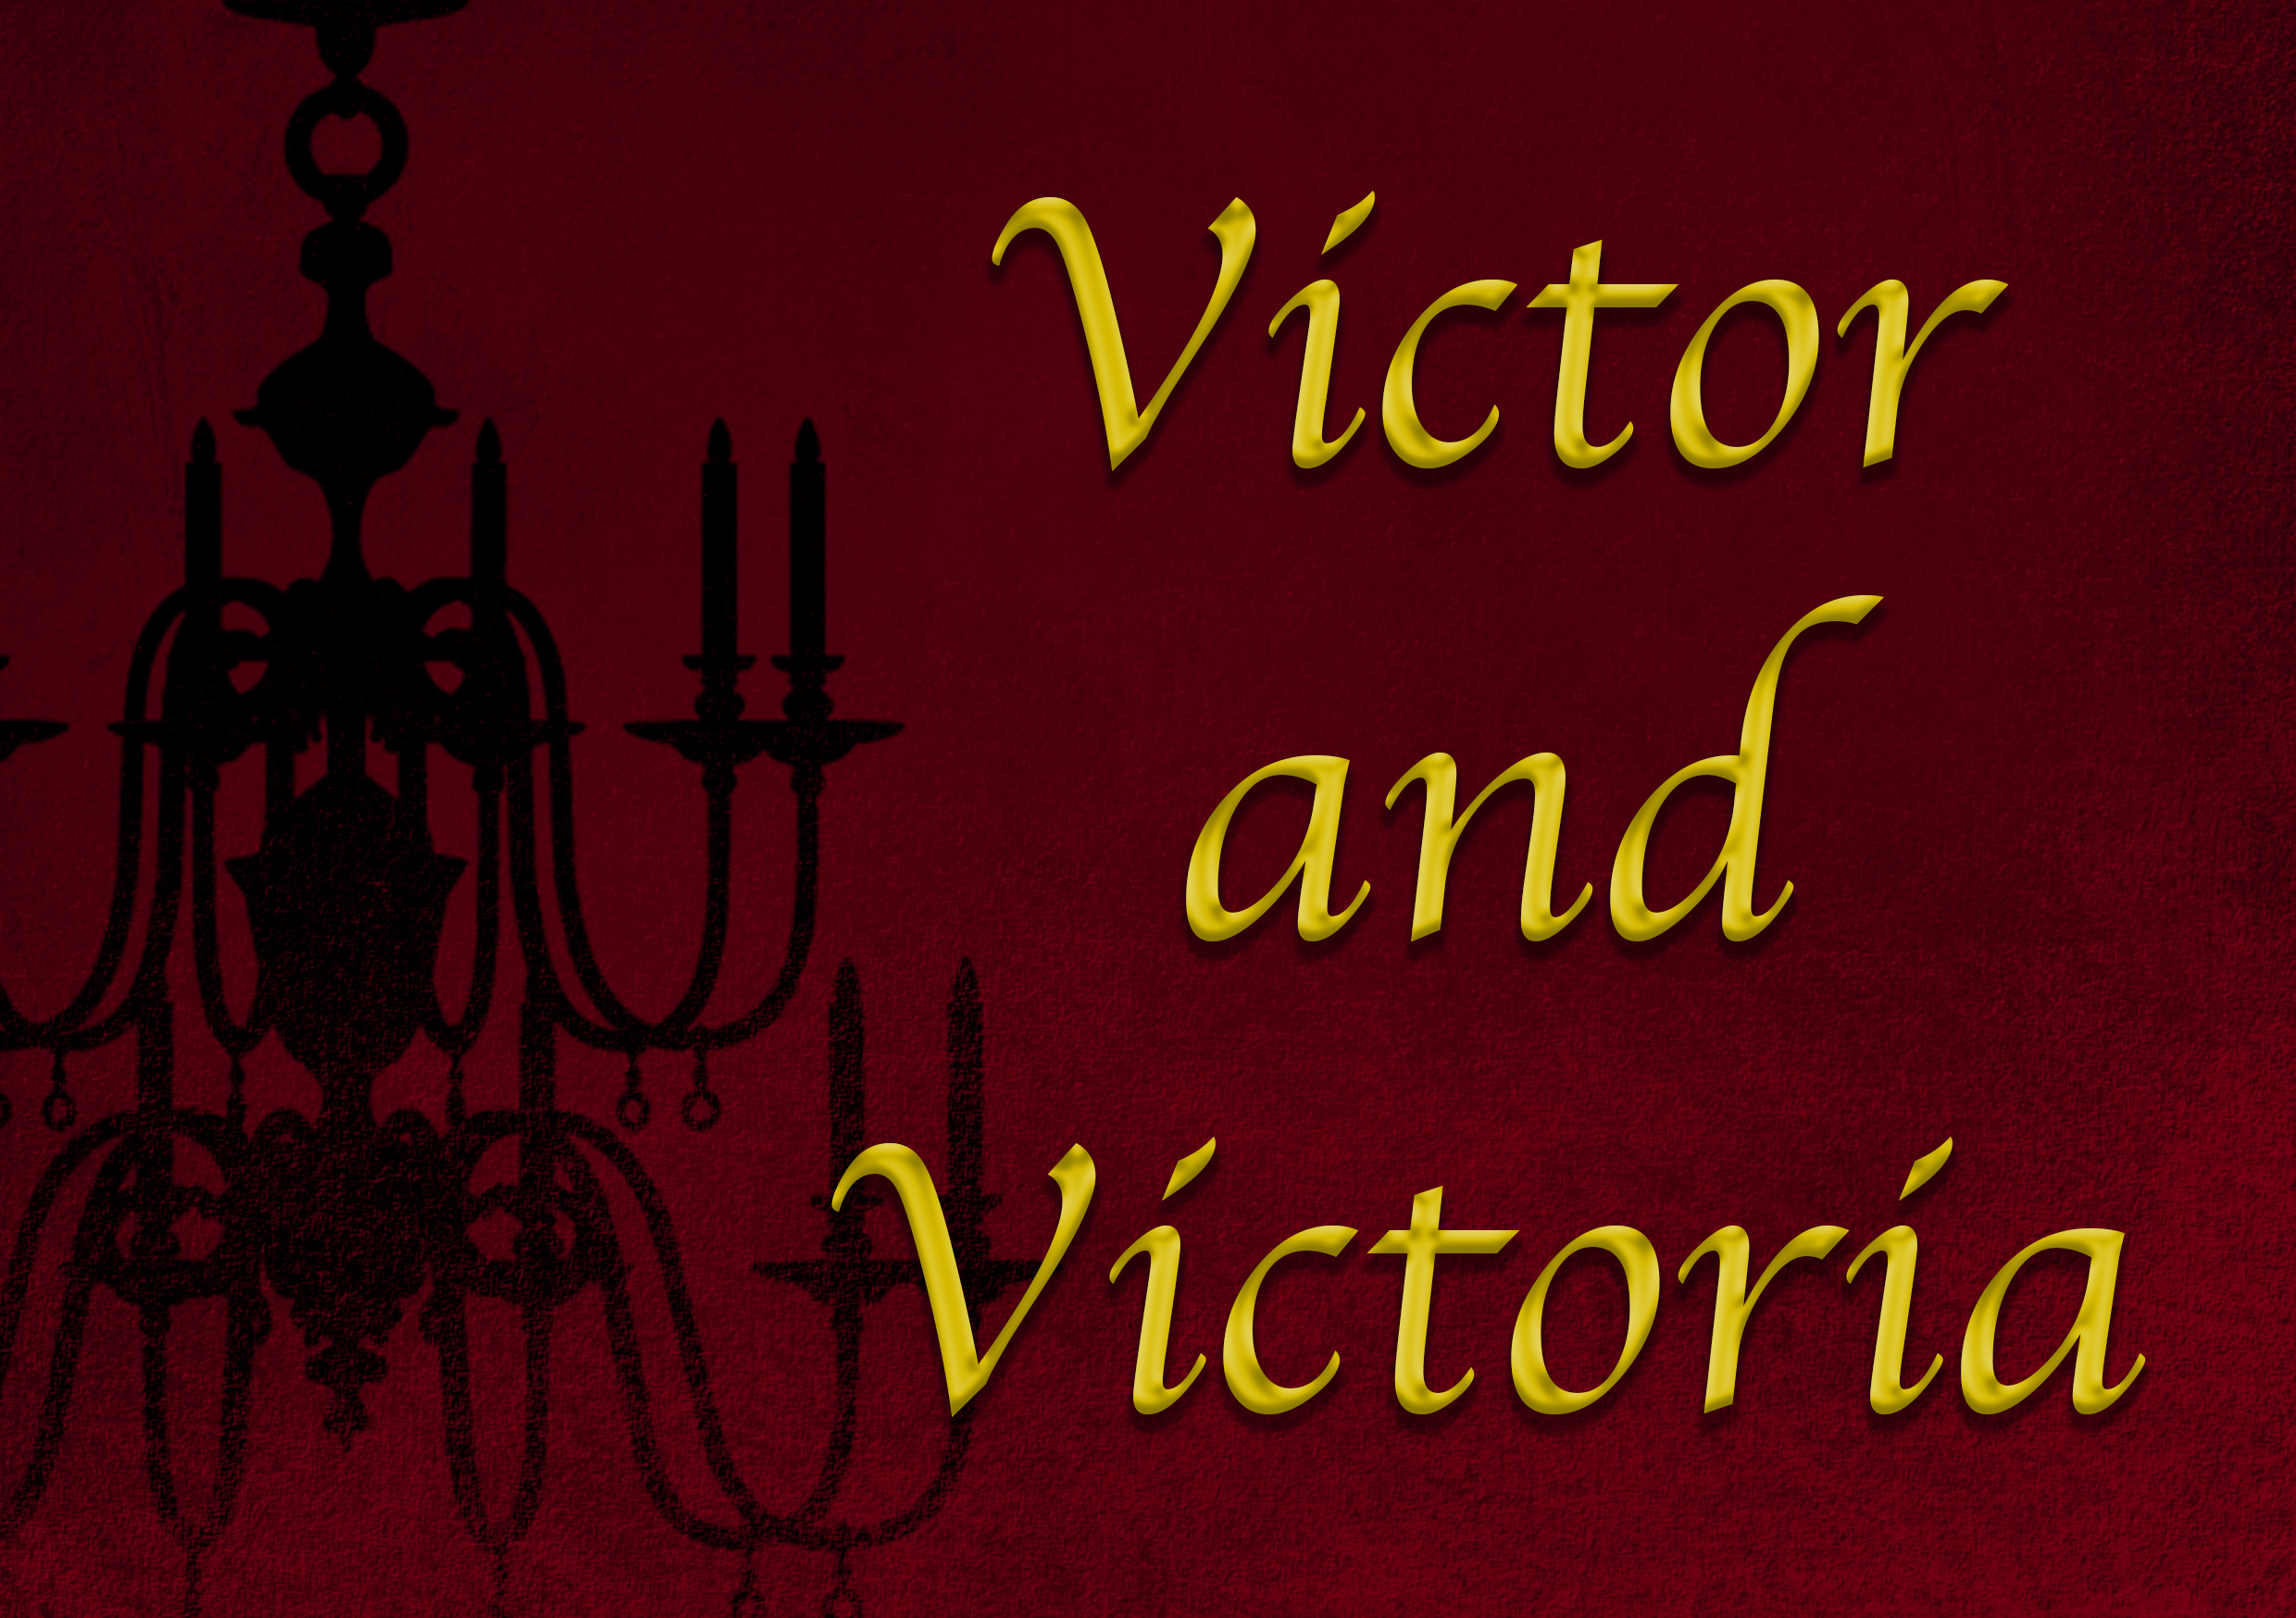 Victor and Victoria